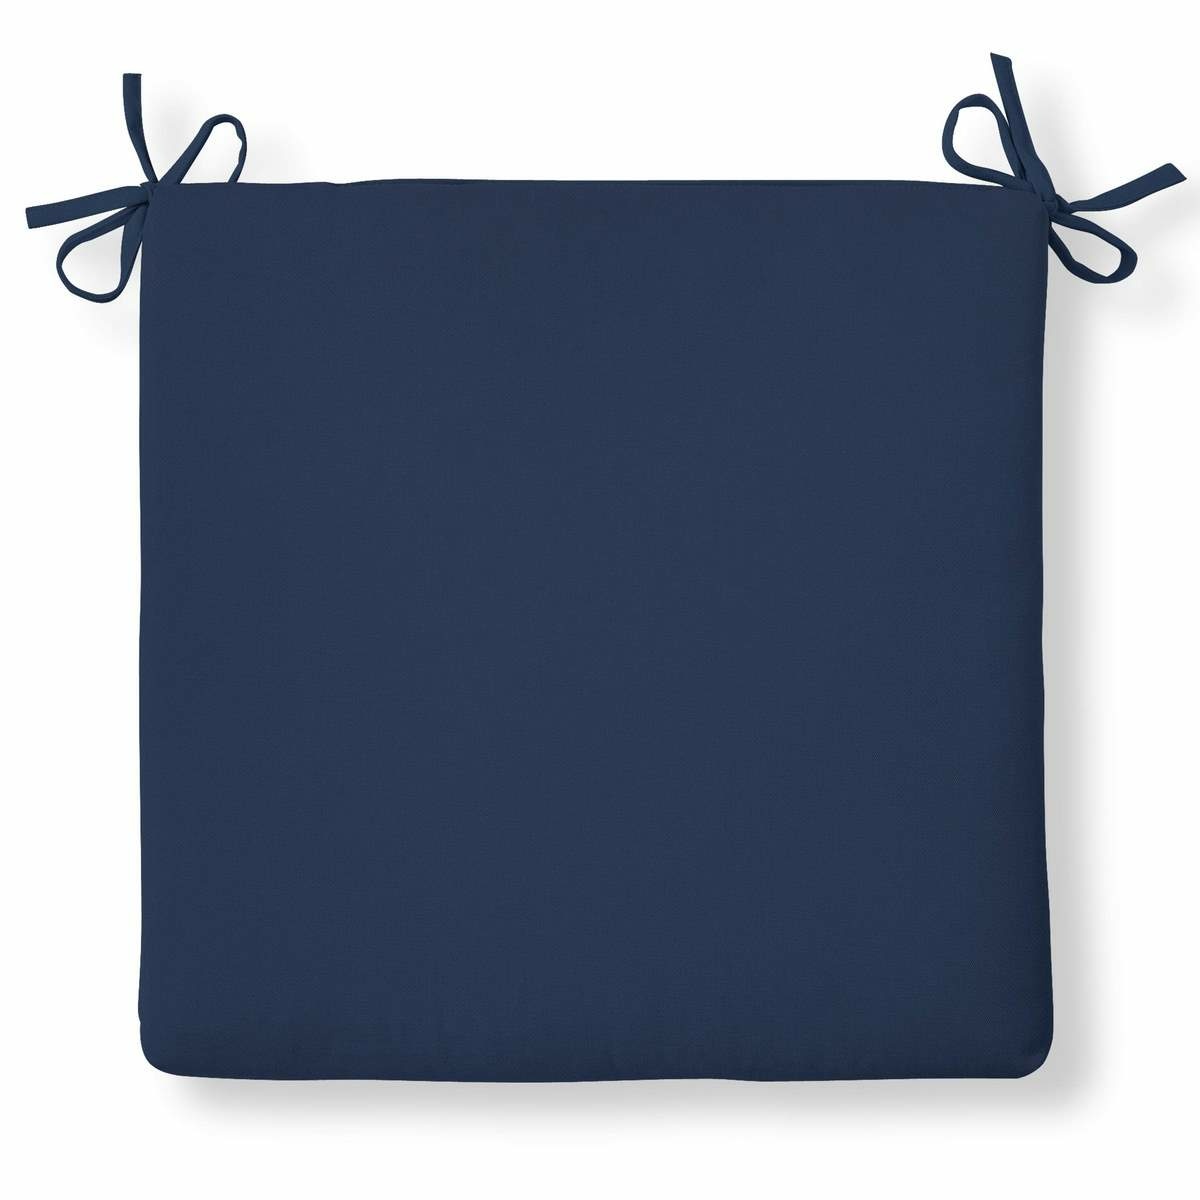 Perna sezut Domarex Oxford Mia impermeabil, albastru inchis, 40 x 40 cm